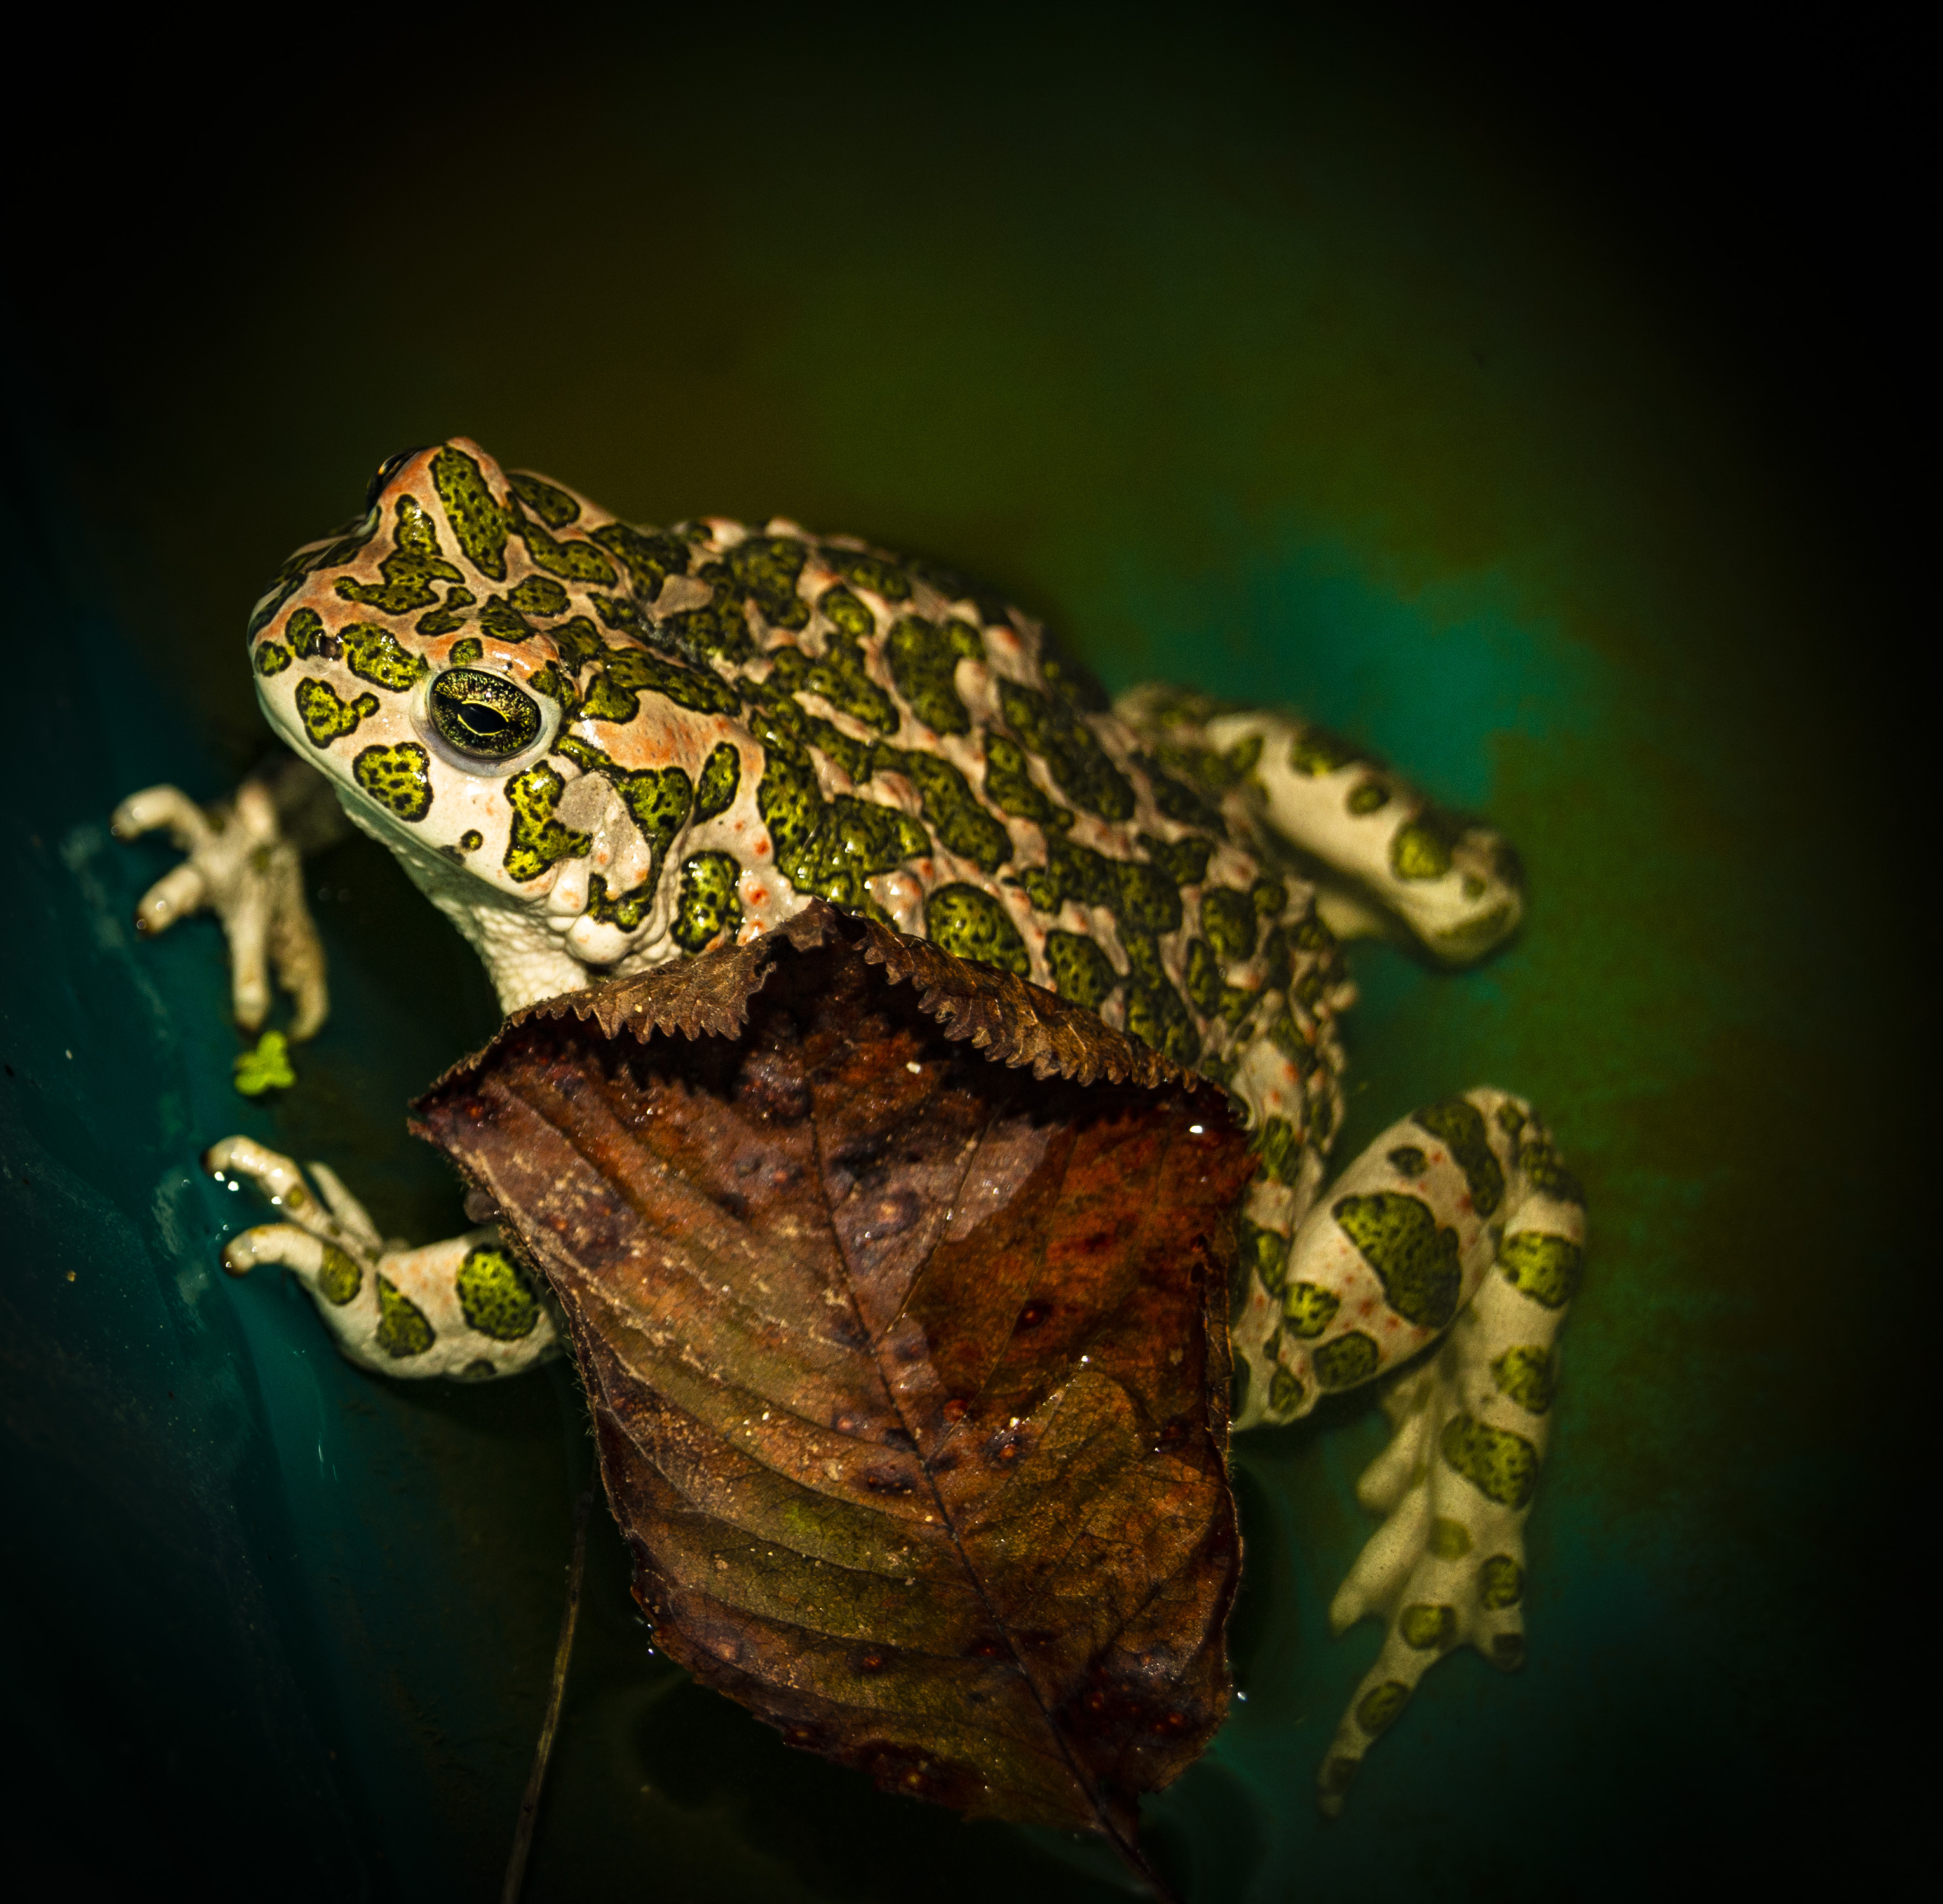 Frog.Frog in a pond.Toad on a leaf.